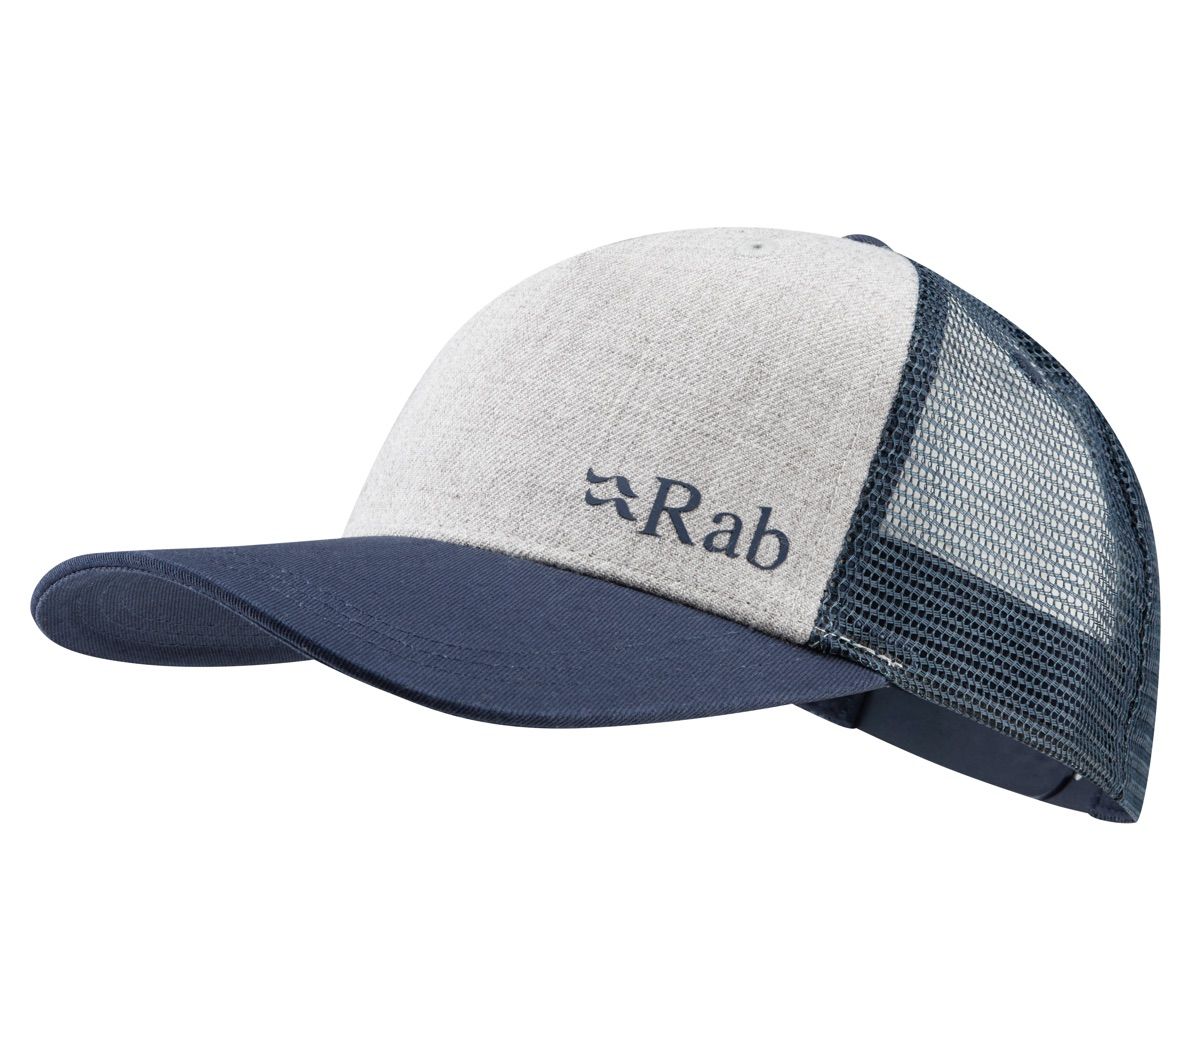 Rab Trucker Logo Cap Grey Marl